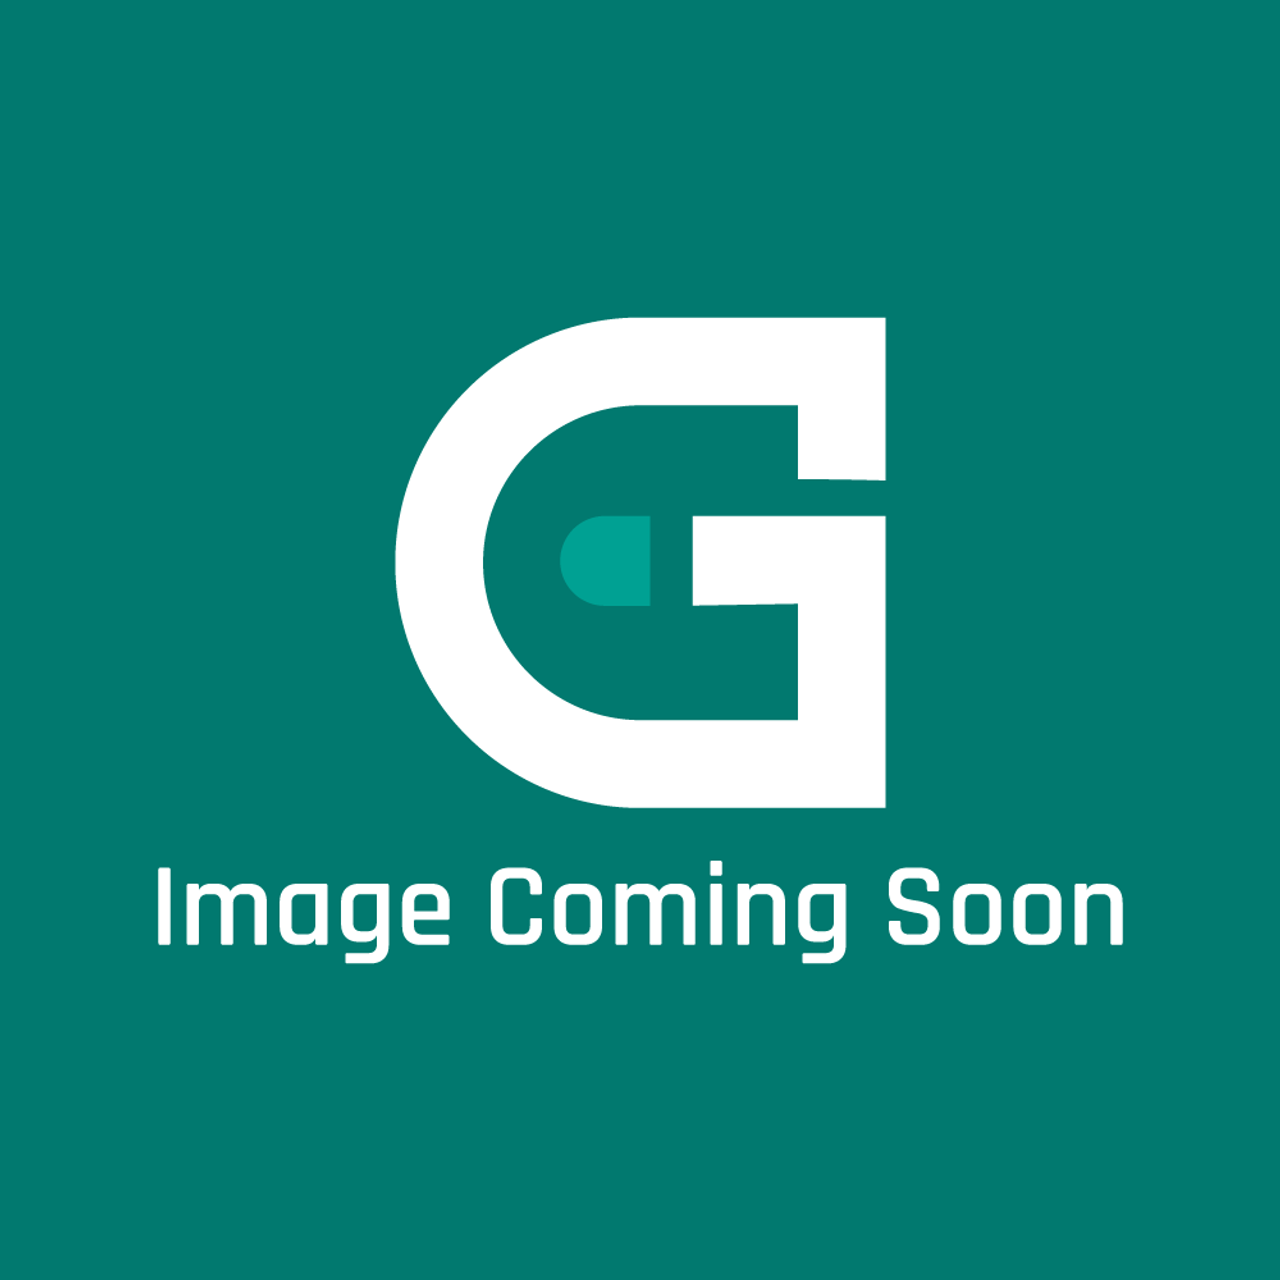 AGA Marvel AO4M997458 - Taisan Pump Oc3 Burner - Image Coming Soon!